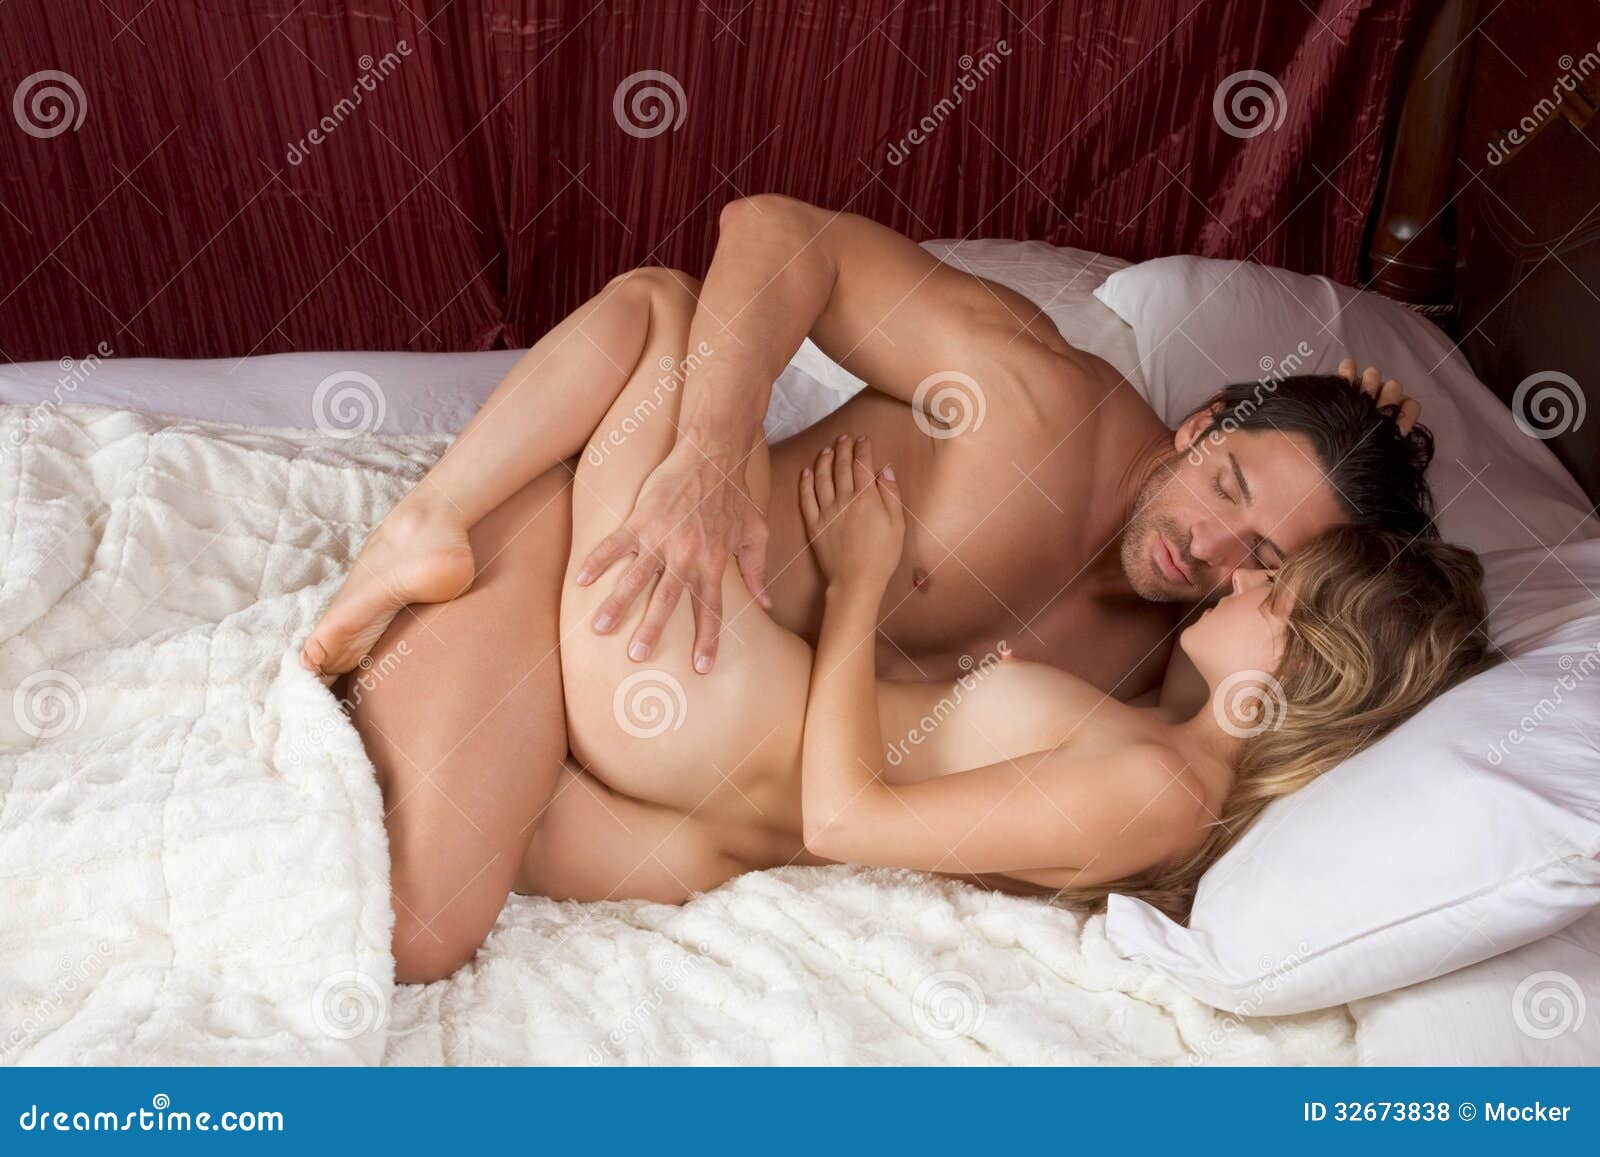 nude couples erotica